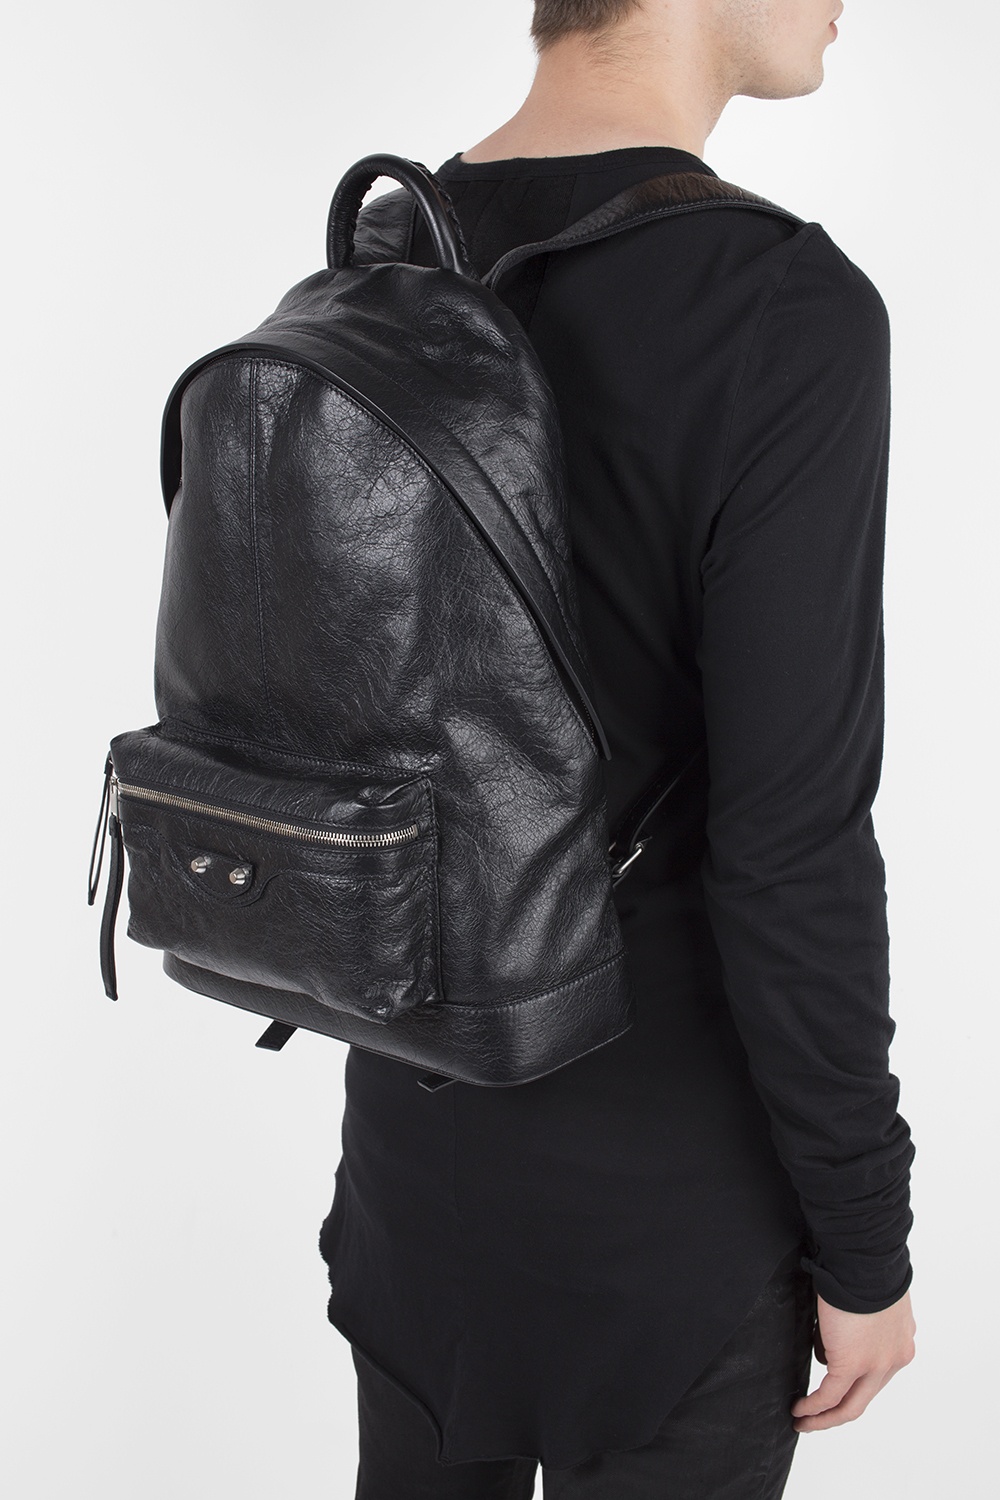 Balenciaga Leather backpack Men's Bags Vitkac